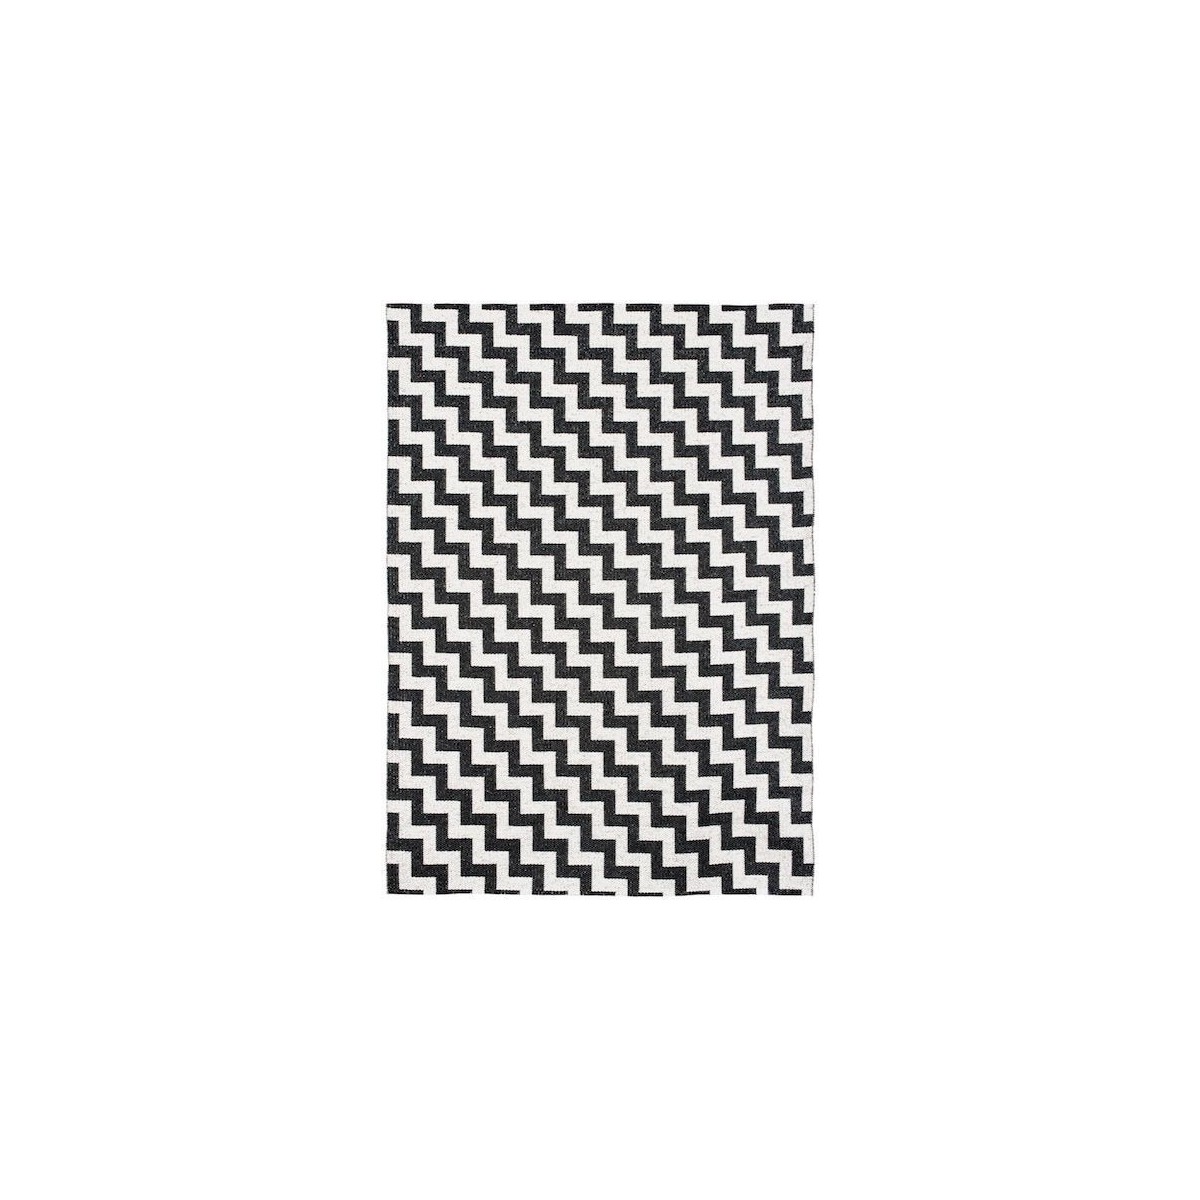 noir - 150x200cm - Gunnel - tapis plastique